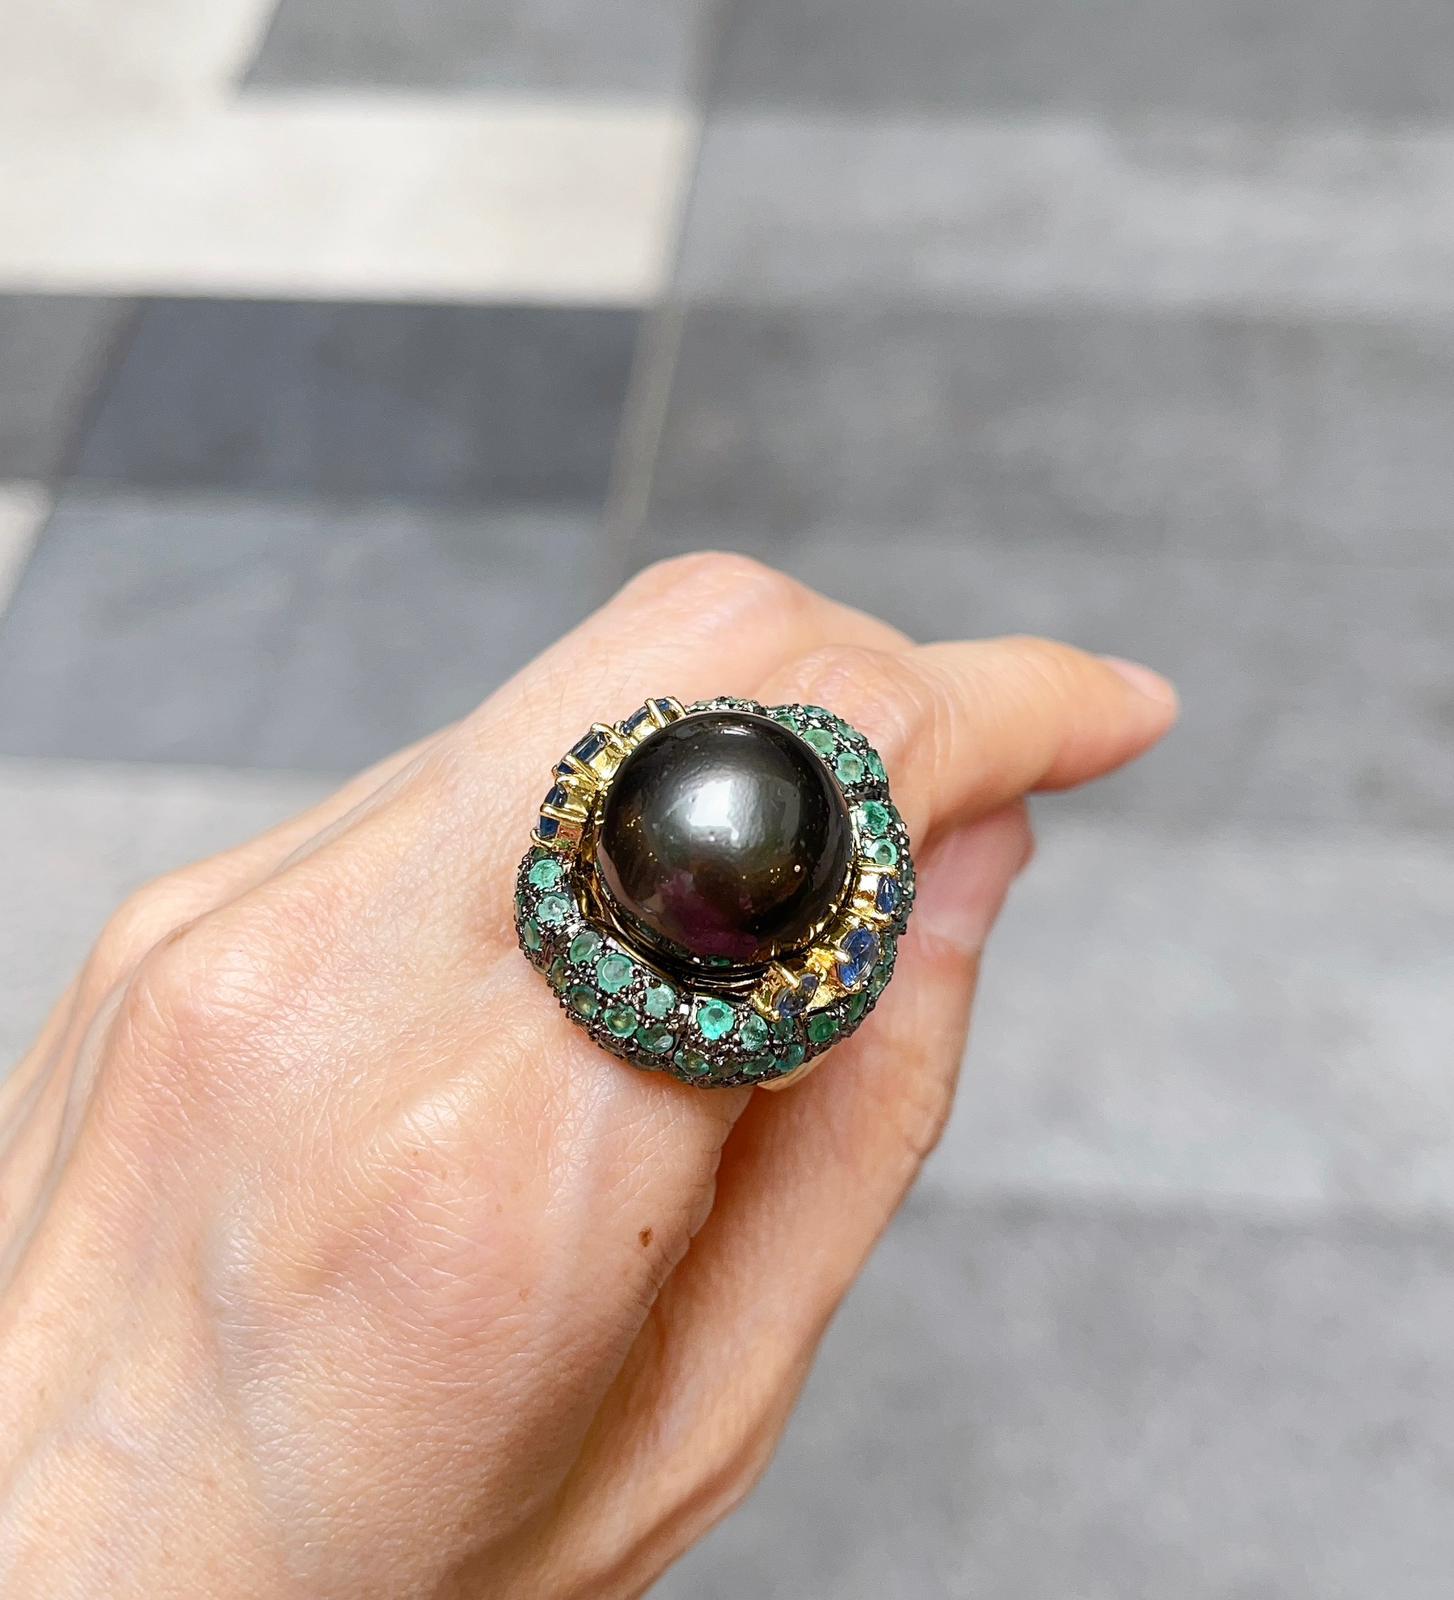 Bochic “Capri” Black Pearl & Emerald / Sapphire Cocktail Ring Set in 22k Gold 5